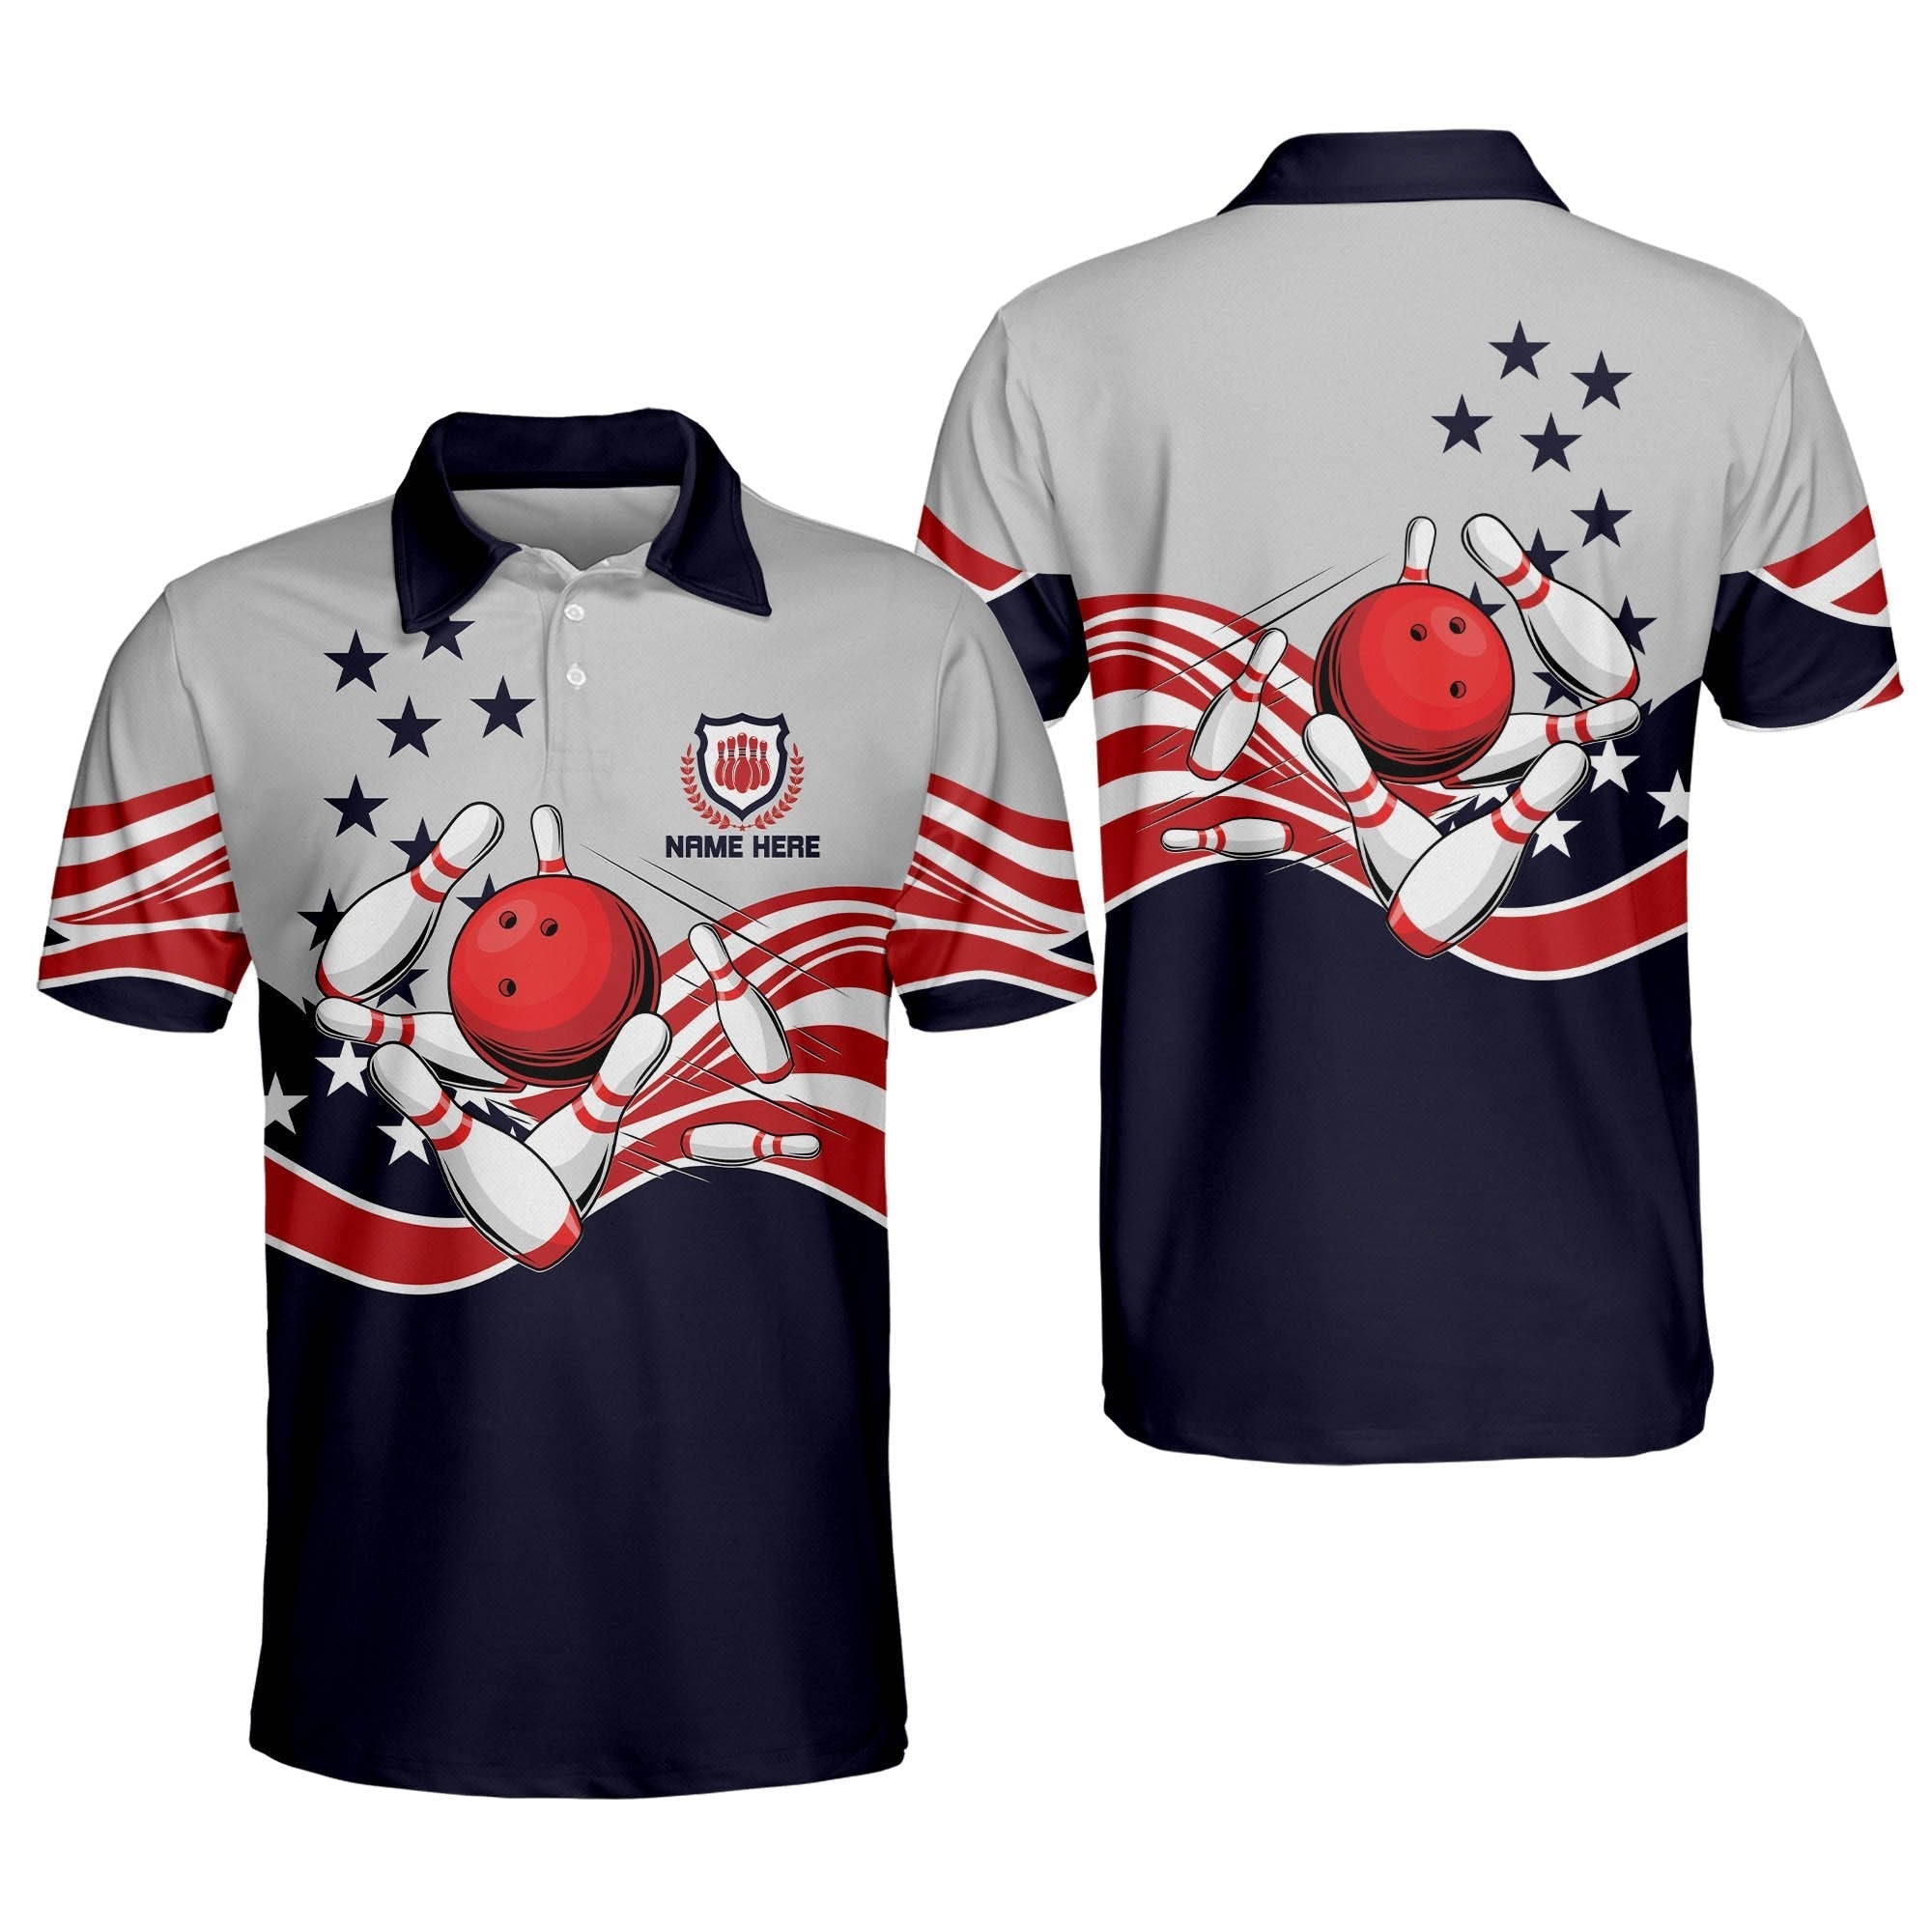 Custom Bowling Shirts for Men, Crazy Cool Bowling Shirts, Team USA